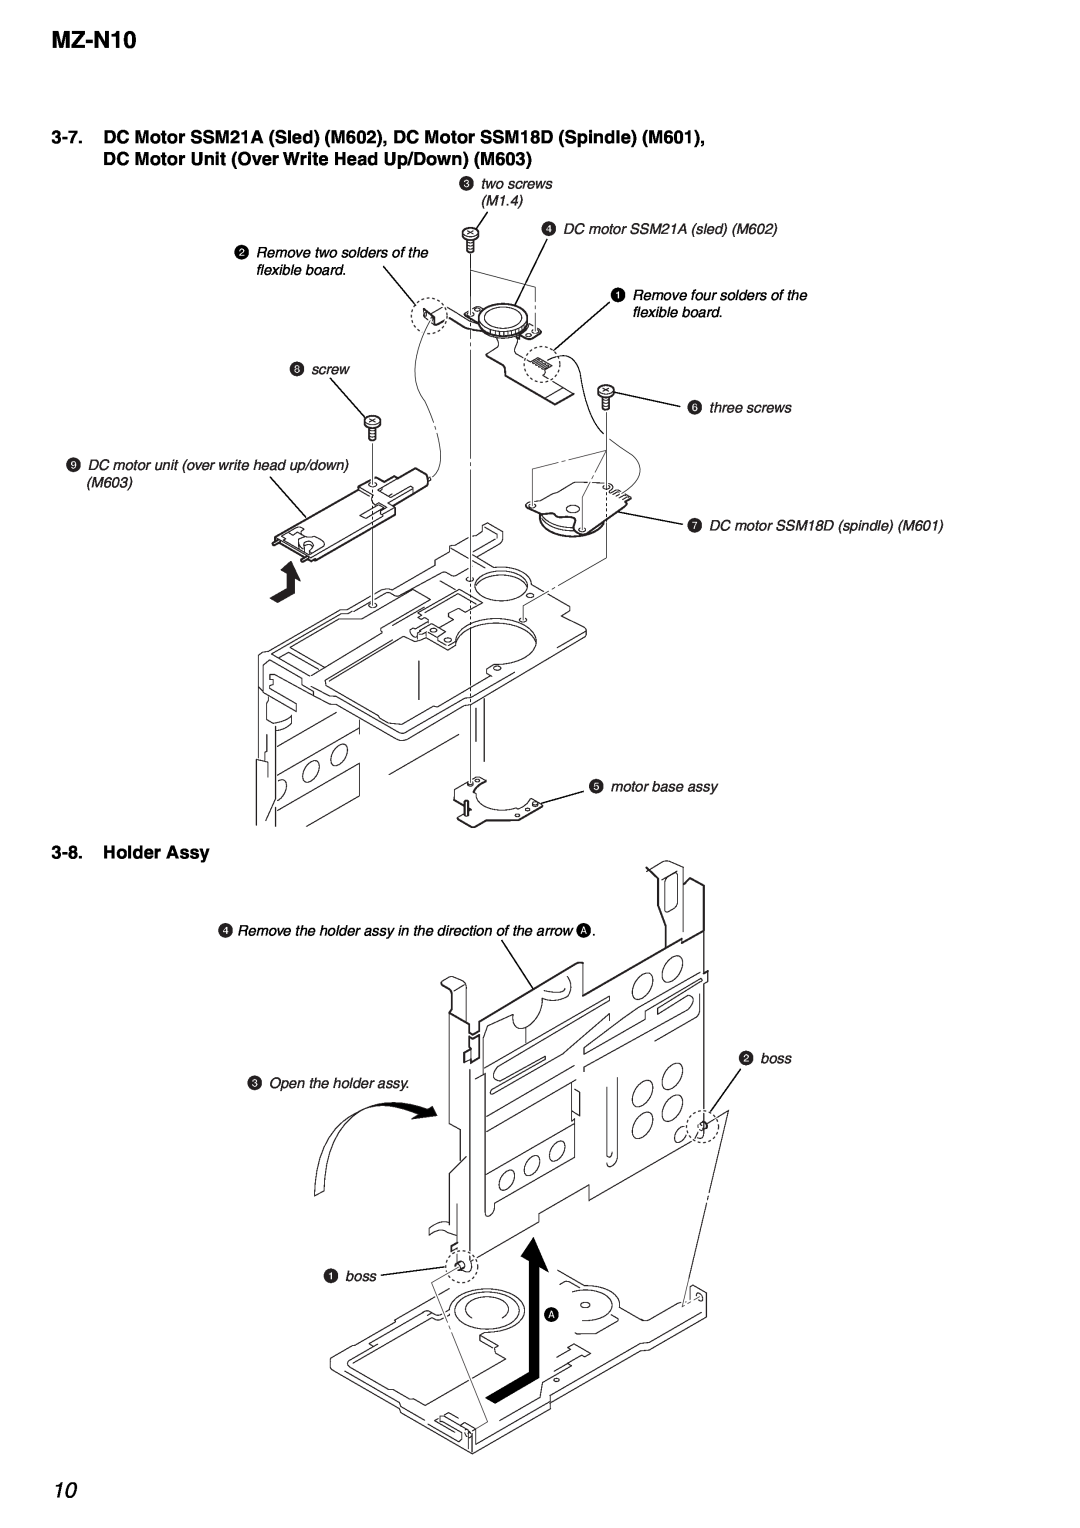 Sony MZ-N10 service manual Holder Assy, 3two screws M1.4 4 DC motor SSM21A sled M602, screw 6 three screws 